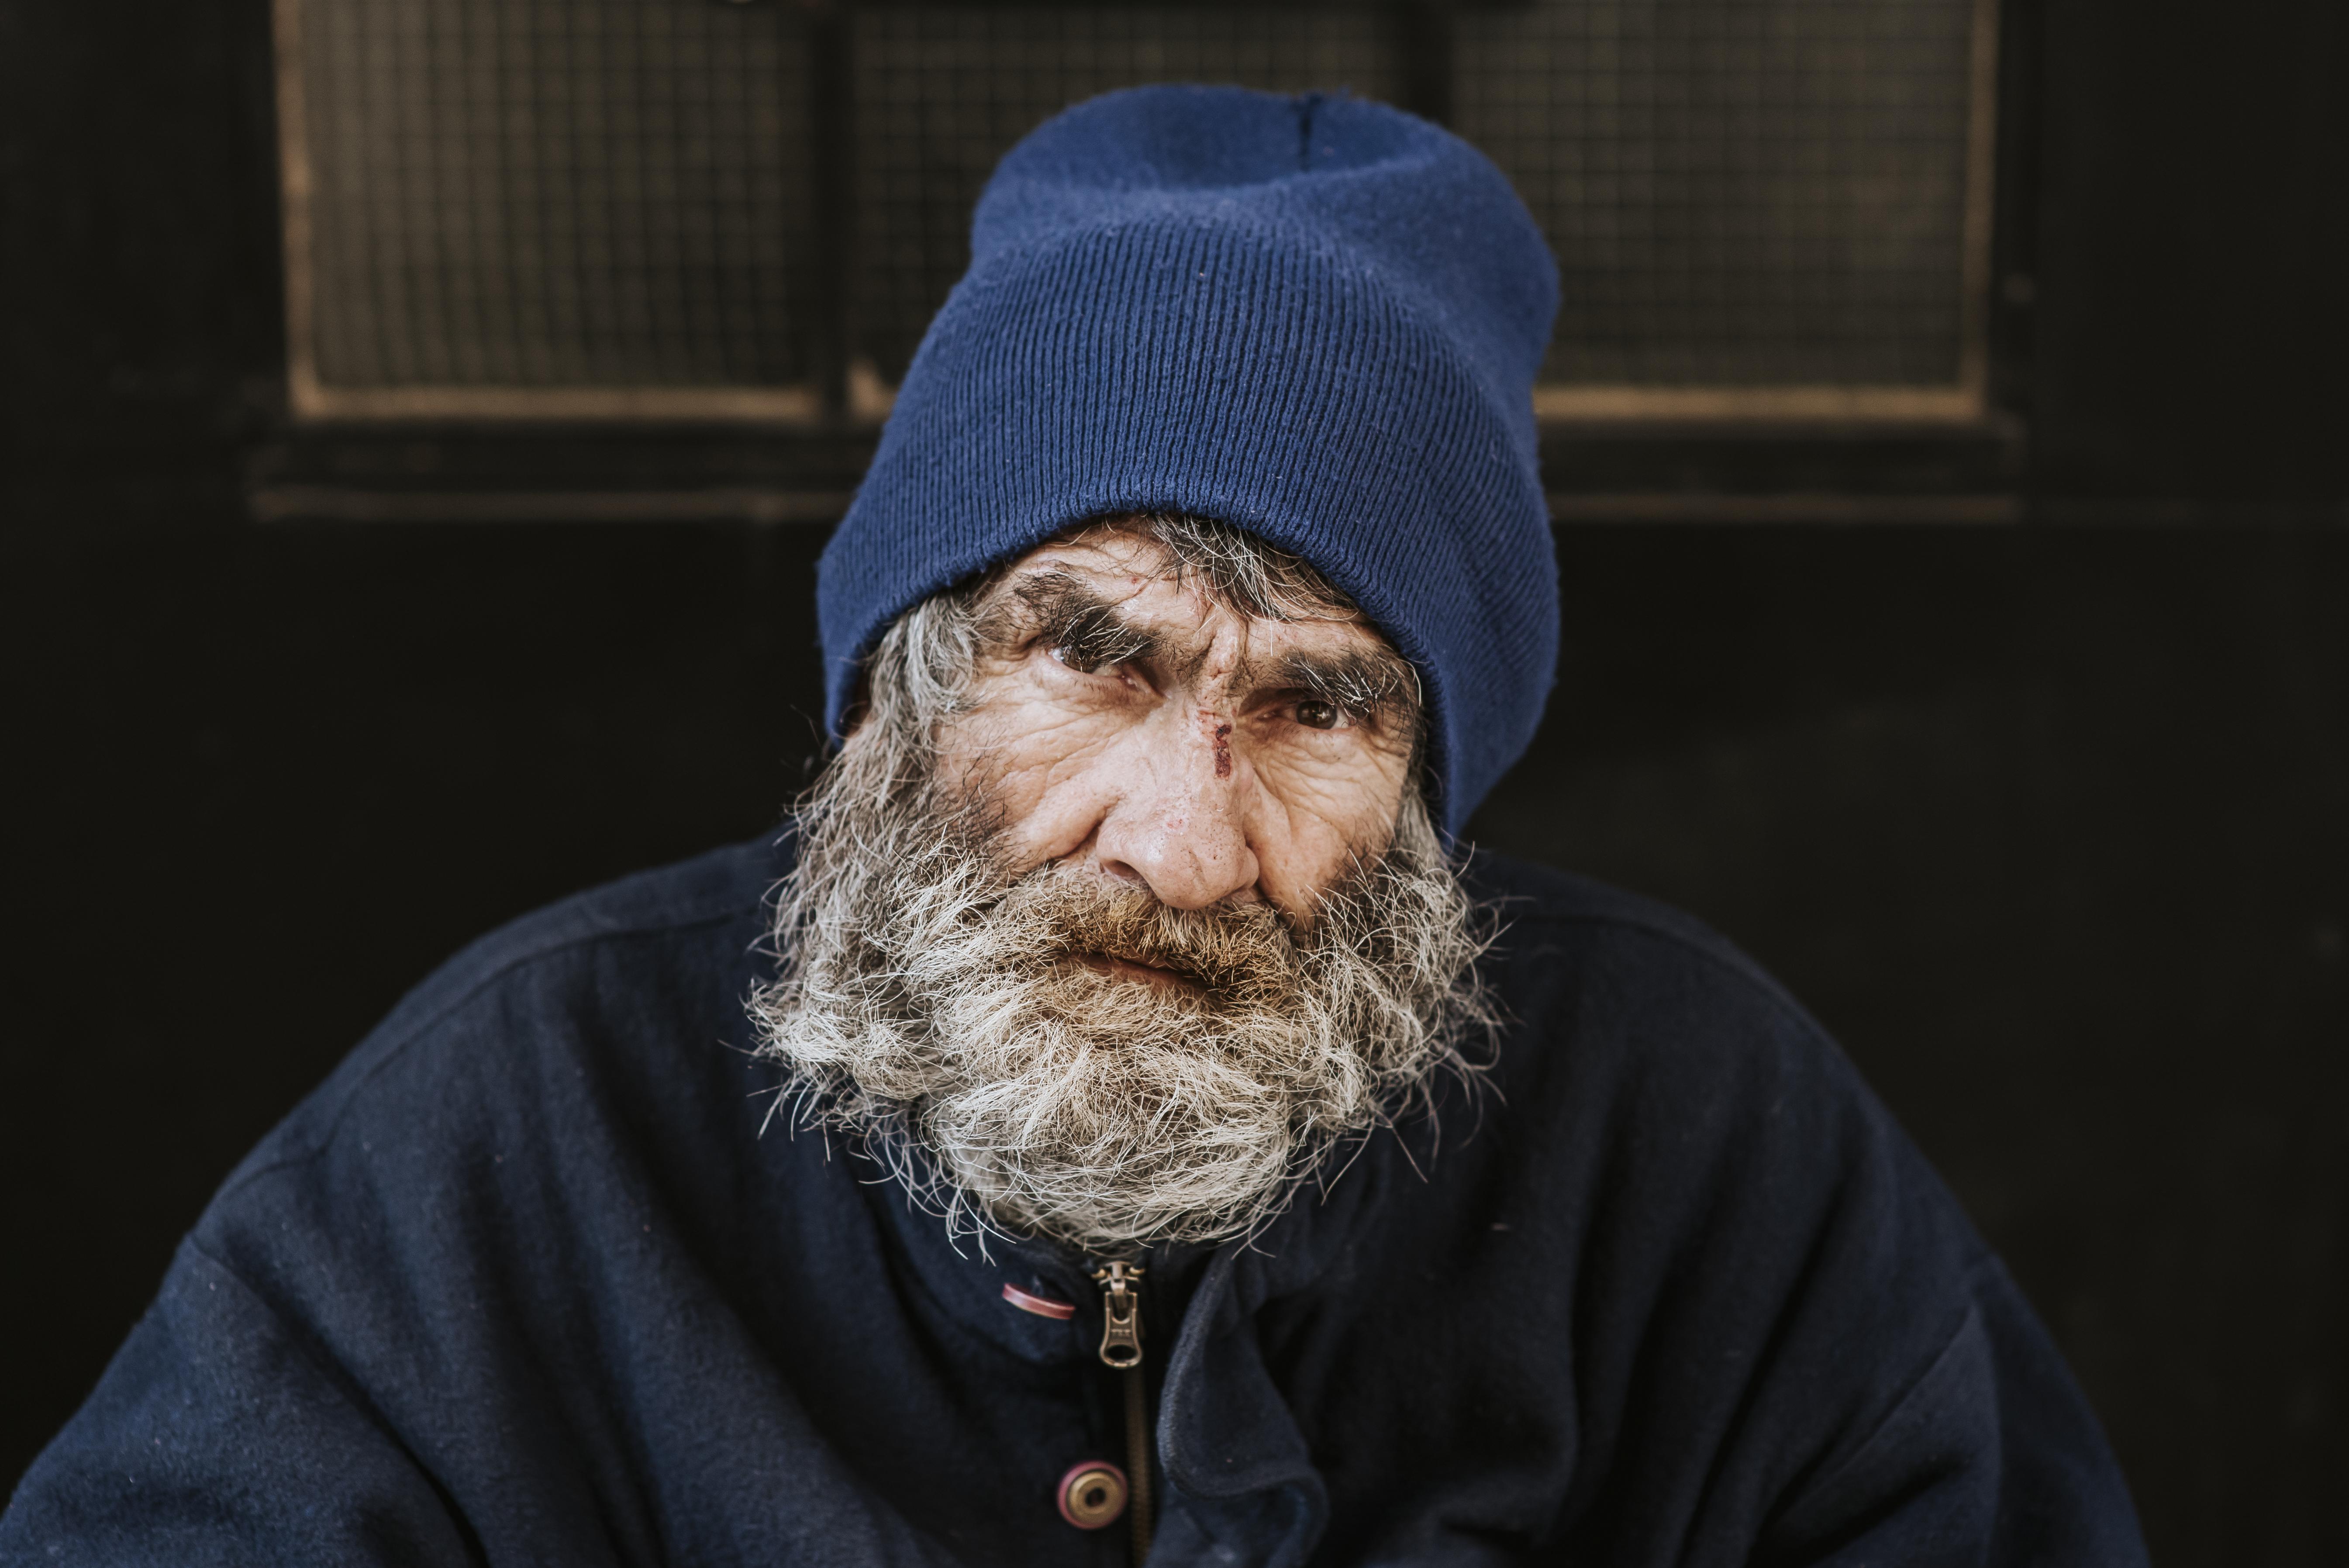 A homeless man | Source: Freepik